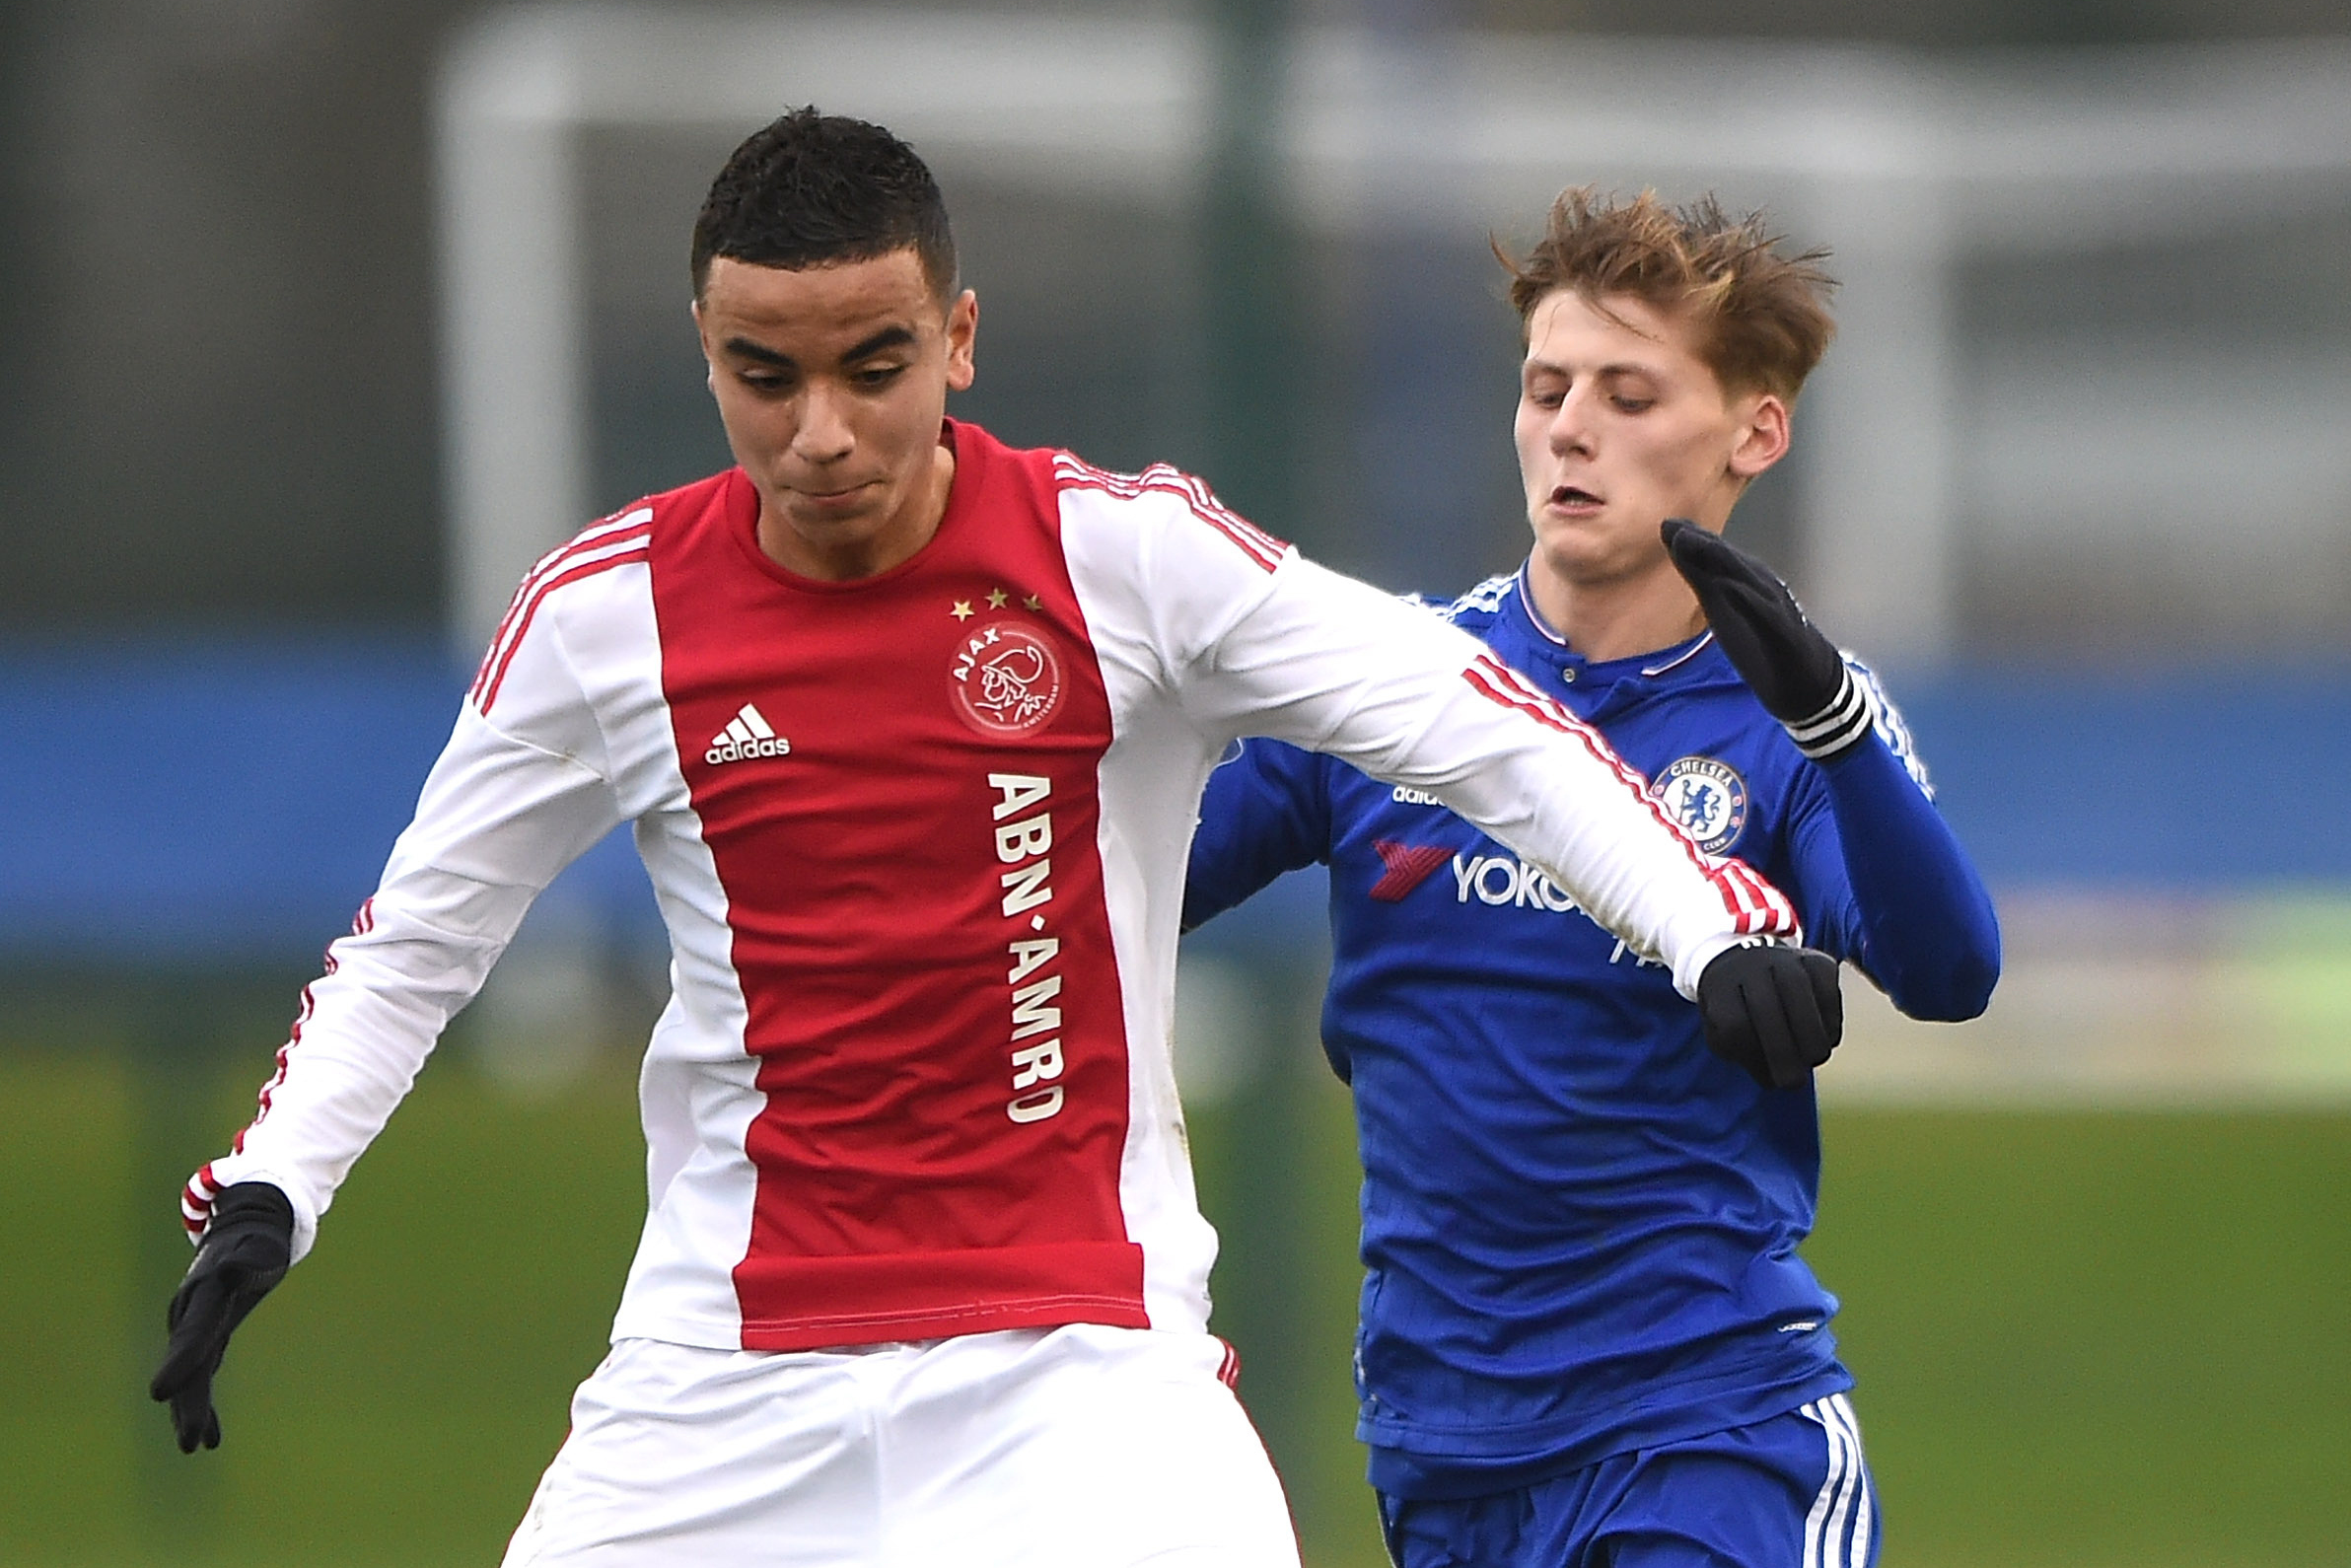 Uefa Youth League Results 15 16 Chelsea Vs Ajax Quarter Final Score Recap Bleacher Report Latest News Videos And Highlights